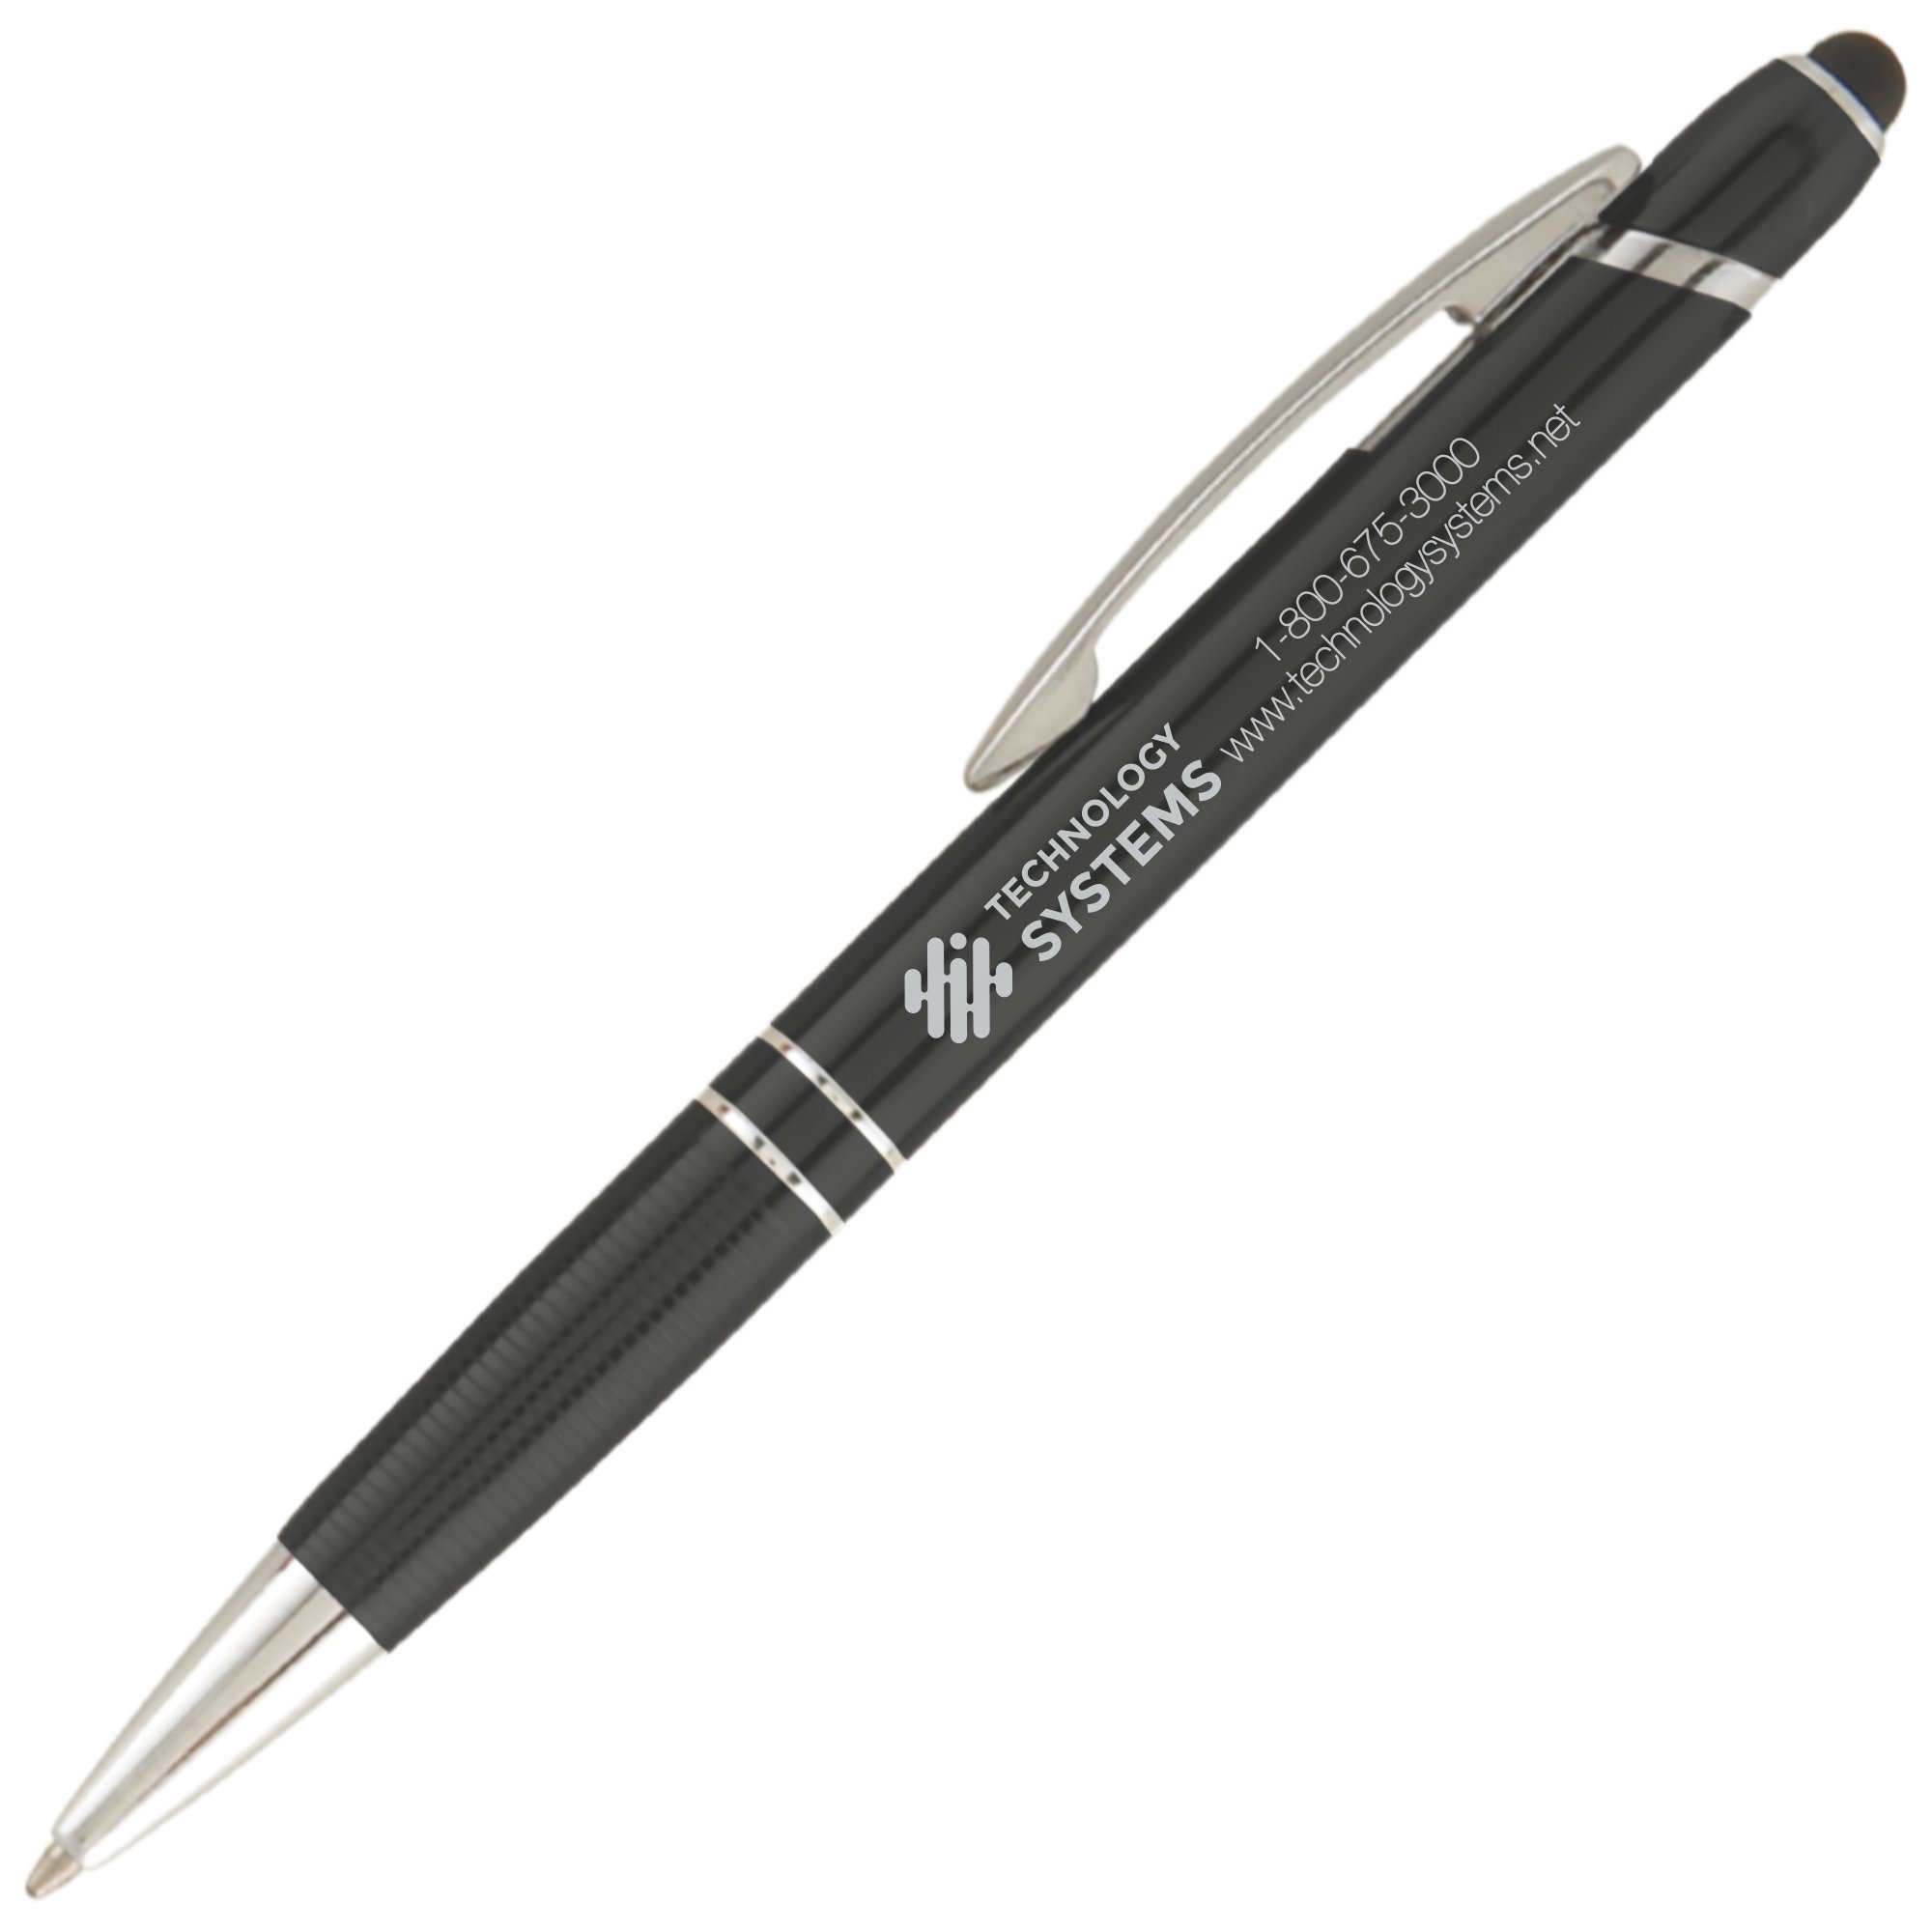 Promotional Delta Stylus Pen Perfect Pen Canada